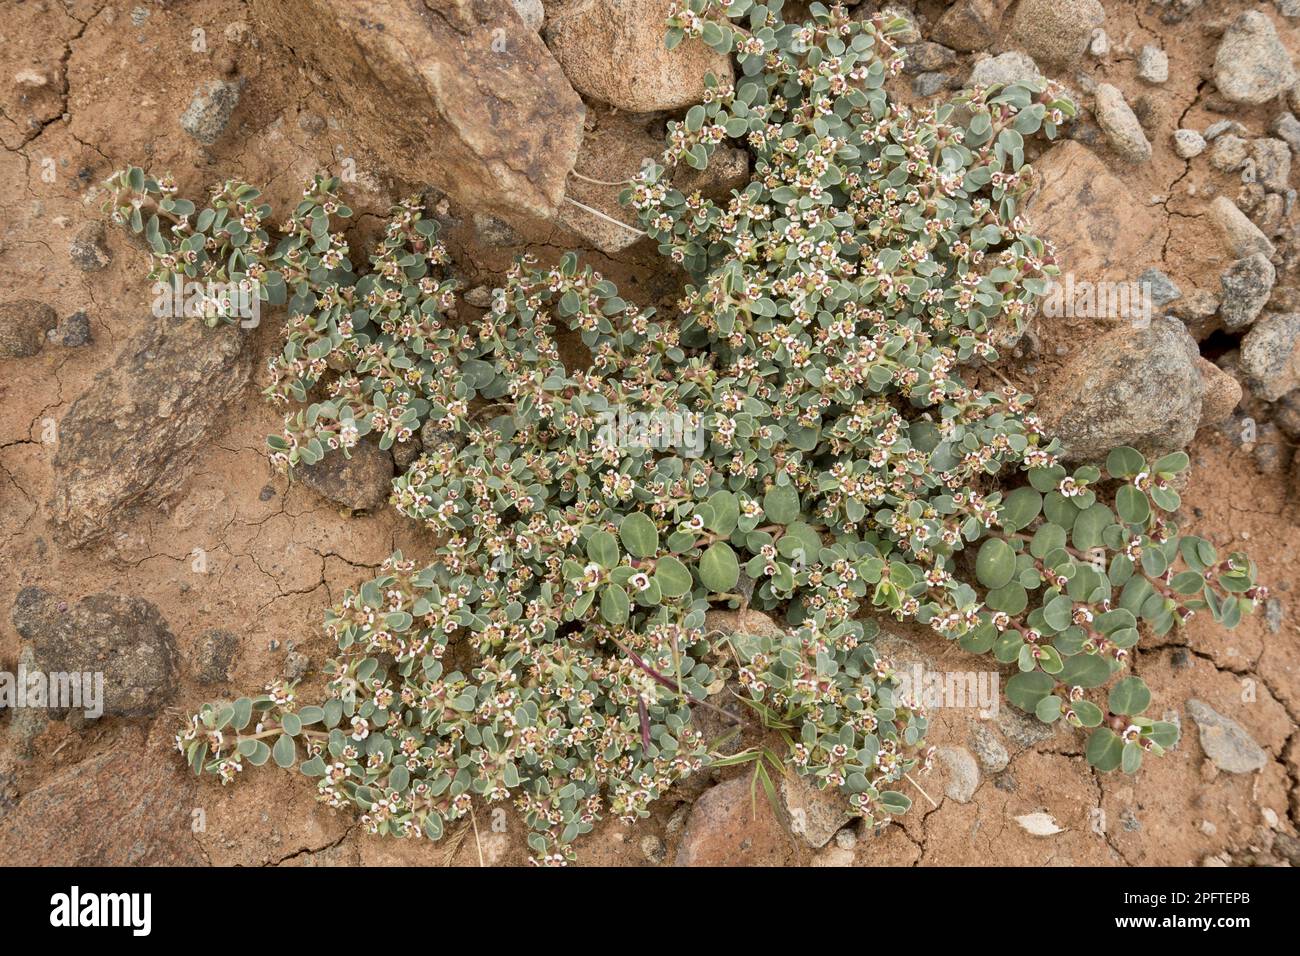 Whitemargin Sandmat (Euphorbia albomarginata) flowering, growing in arid desert, Big Bend N. P. Chihuahuan Desert, Texas (U.) S. A Stock Photo